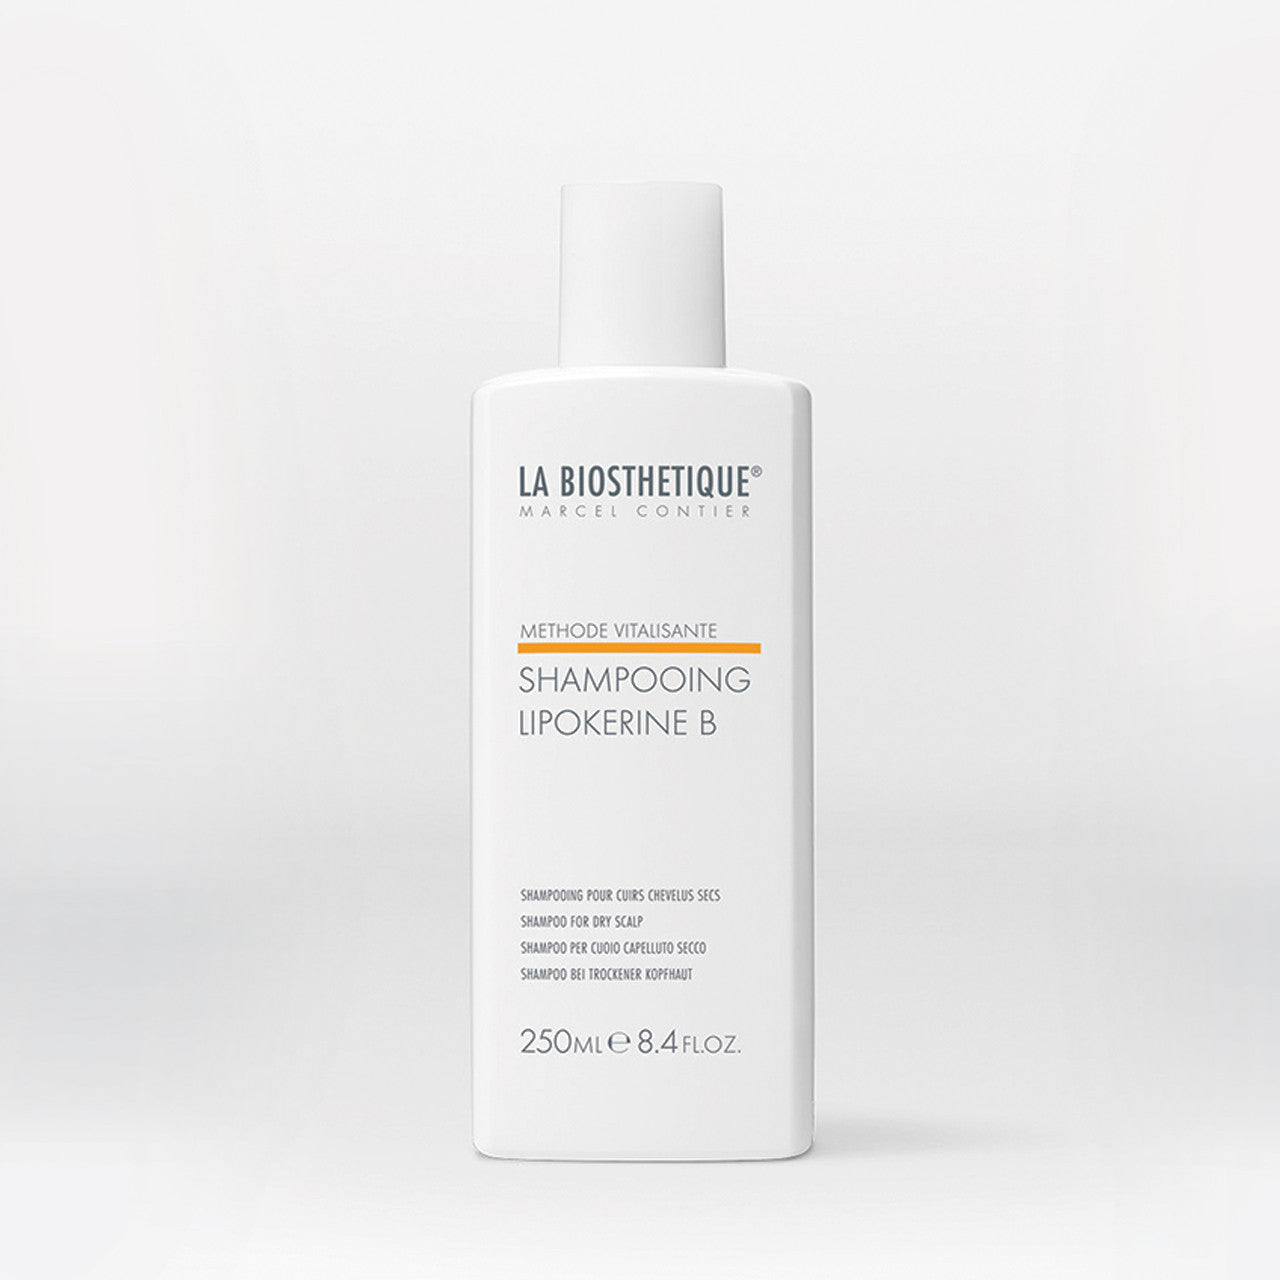 La Biosthetique's Methodes Vitalisante - Shampooing Lipokerine B 250 ml for dry scalp